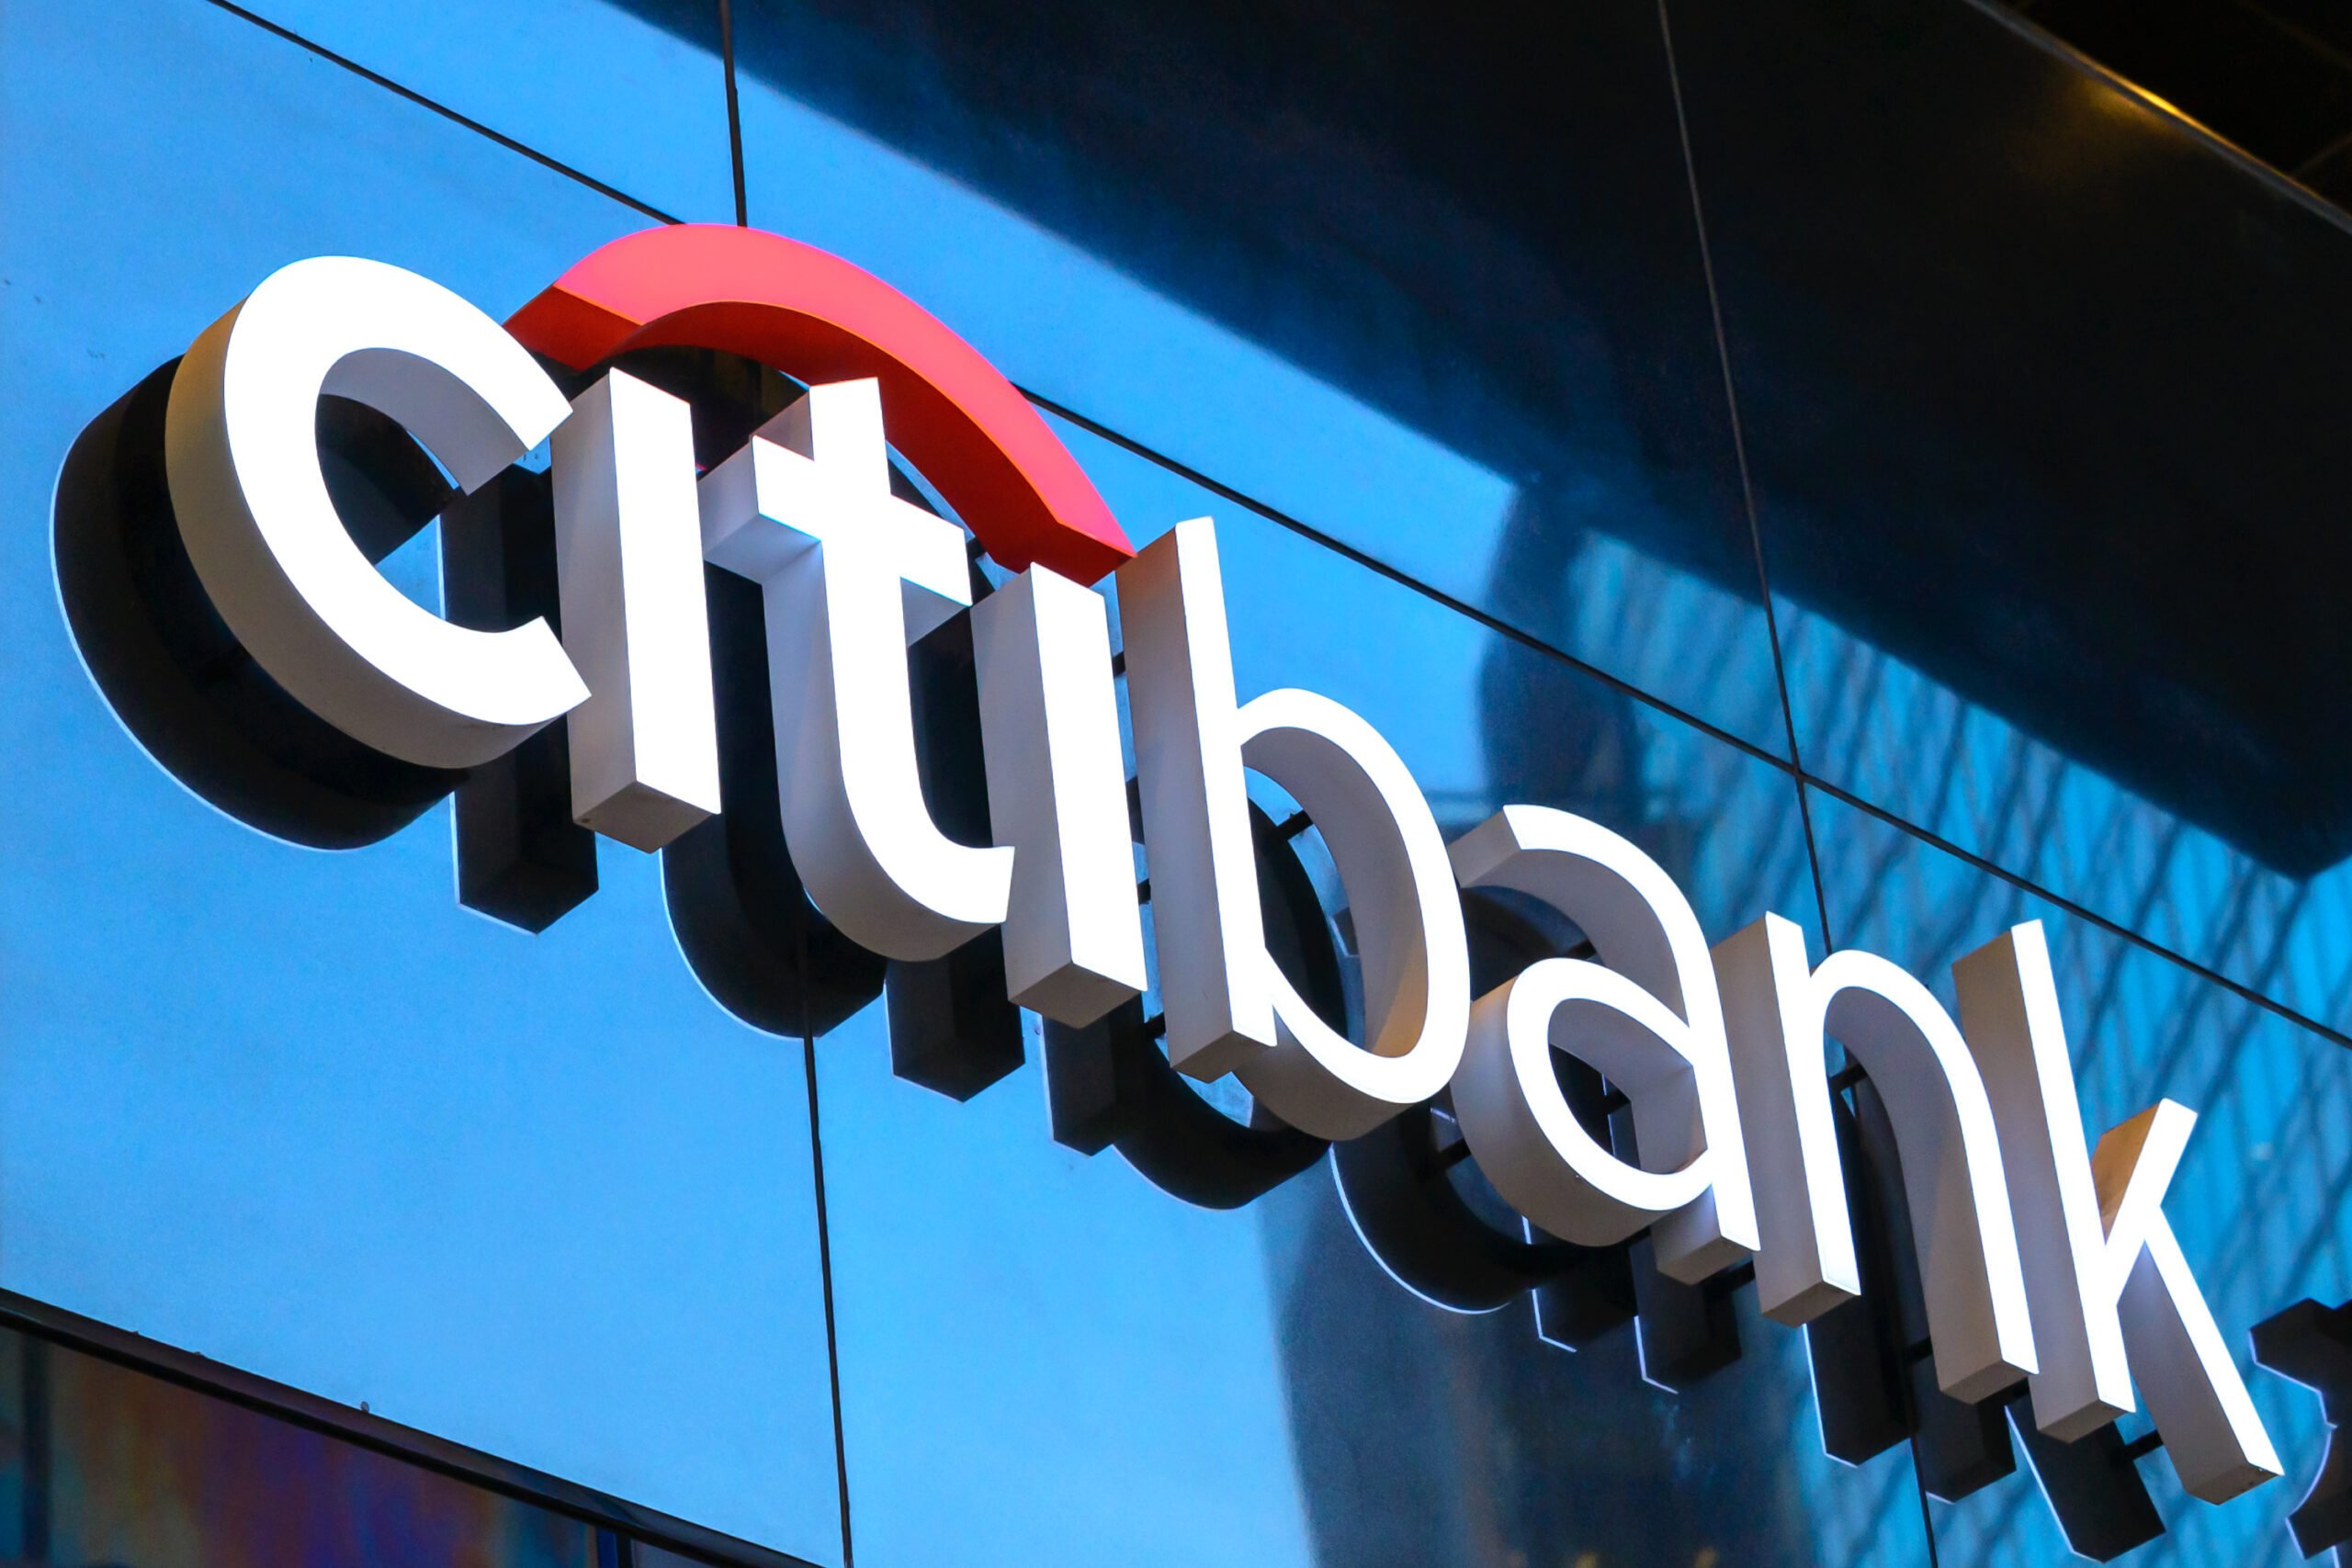 Sit bank. Citibank. City банк. Ситибанк американский банк. Citibank логотип.